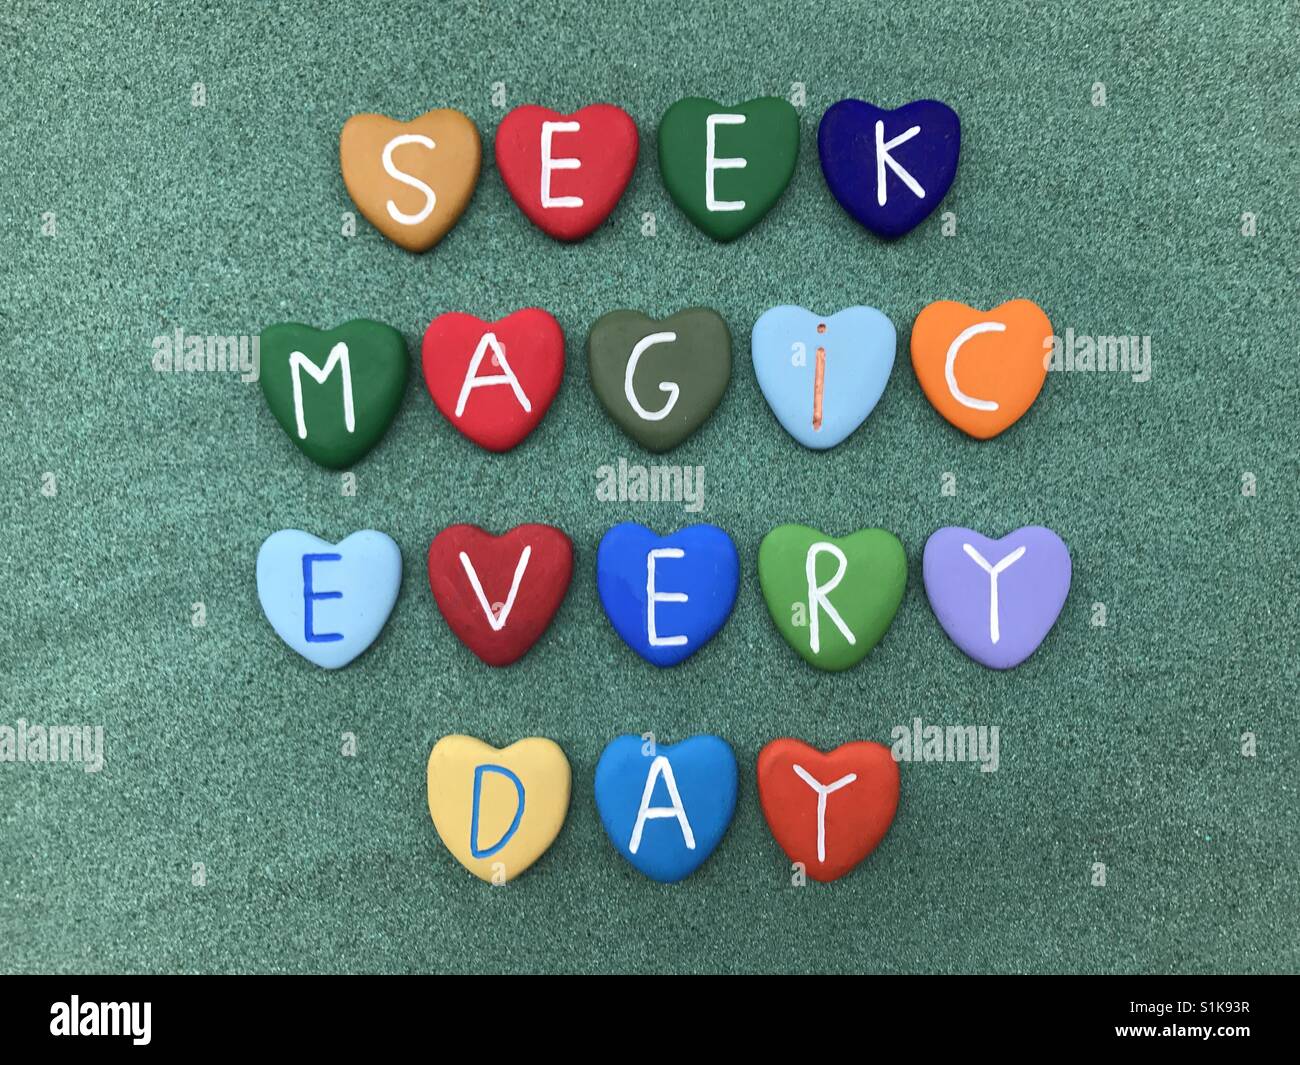 Seek Magic Every Day Stock Photo